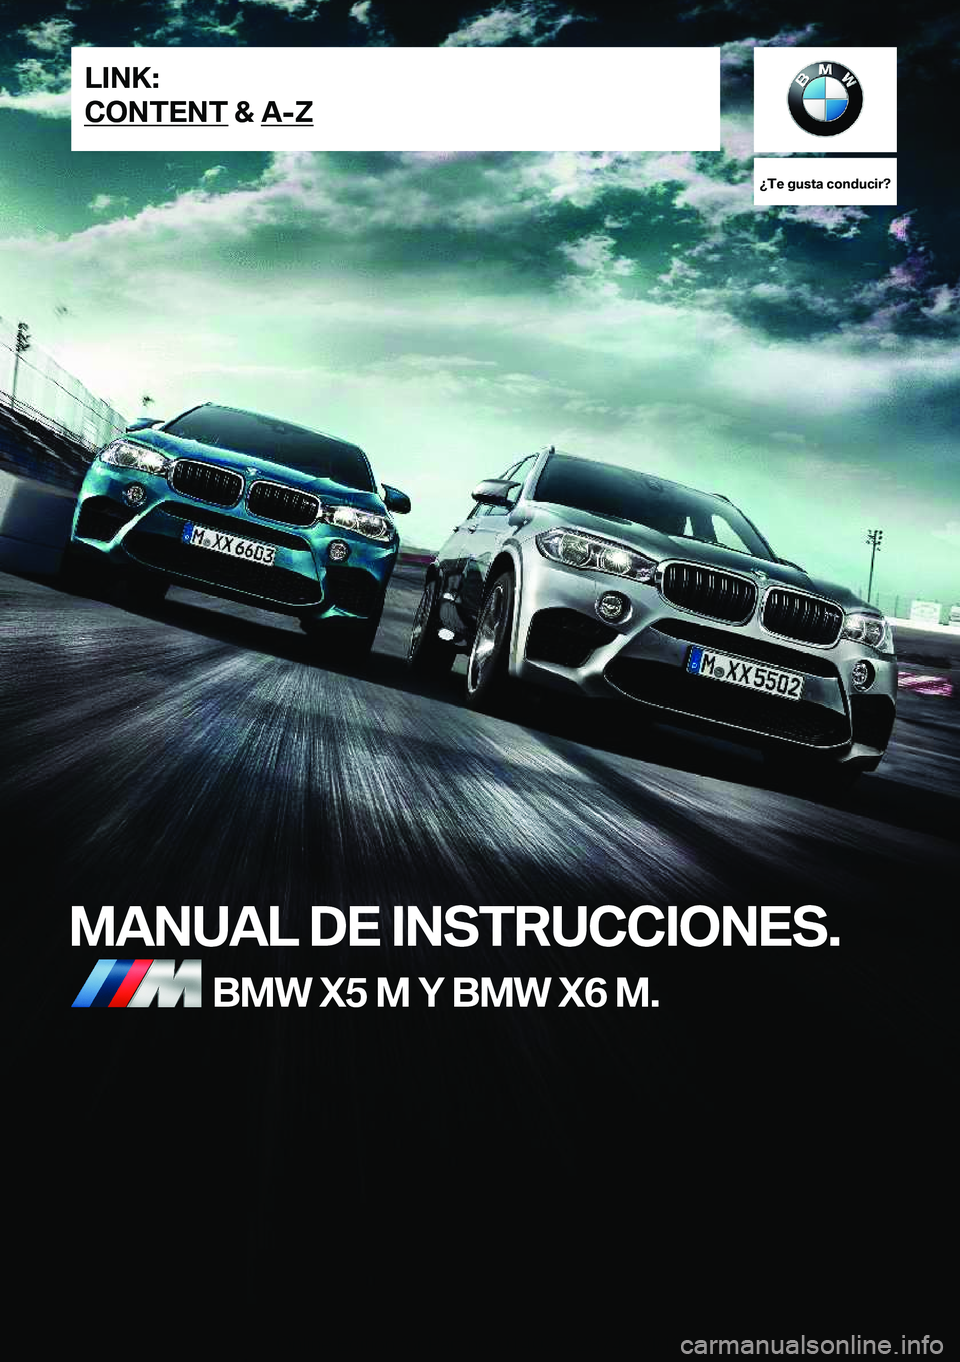 BMW X6 M 2019  Manuales de Empleo (in Spanish) ��T�e��g�u�s�t�a��c�o�n�d�u�c�i�r� 
�M�A�N�U�A�L��D�E��I�N�S�T�R�U�C�C�I�O�N�E�S�.�B�M�W��X�5��M��Y��B�M�W��X�6��M�.�L�I�N�K�:
�C�O�N�T�E�N�T��&��A�-�Z�O�n�l�i�n�e��E�d�i�t�i�o�n��f�o�r